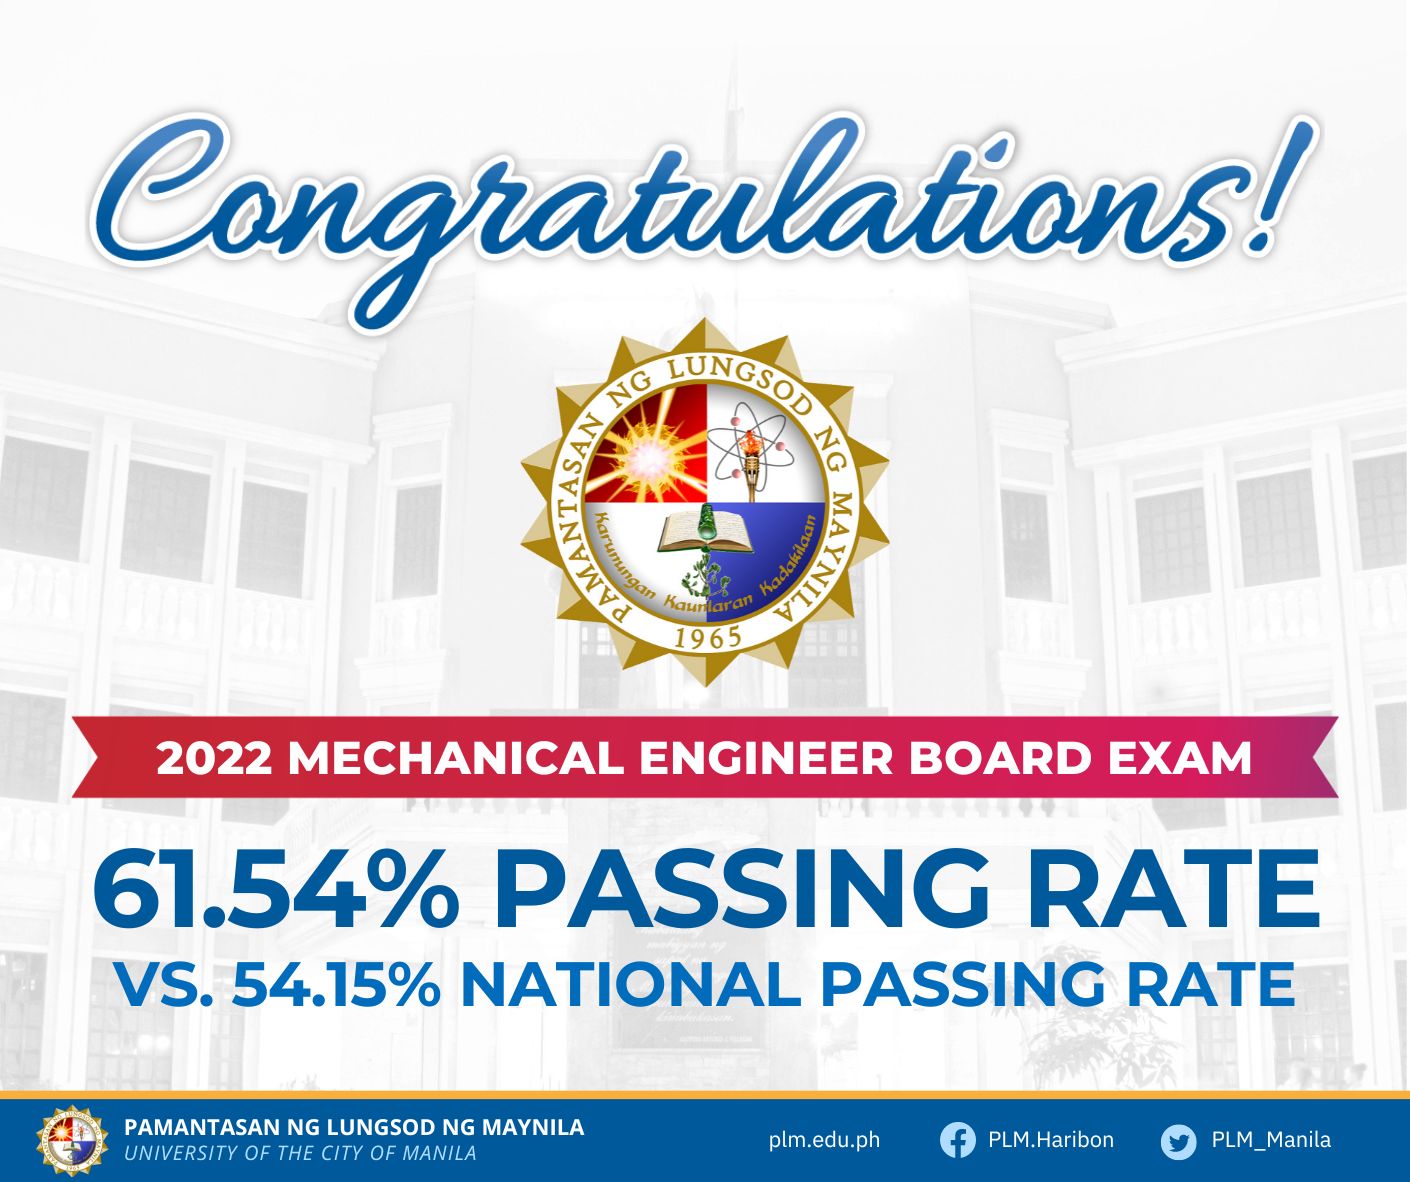 PLM logs 61.54% passing rate in Mechanical Engineering board exam